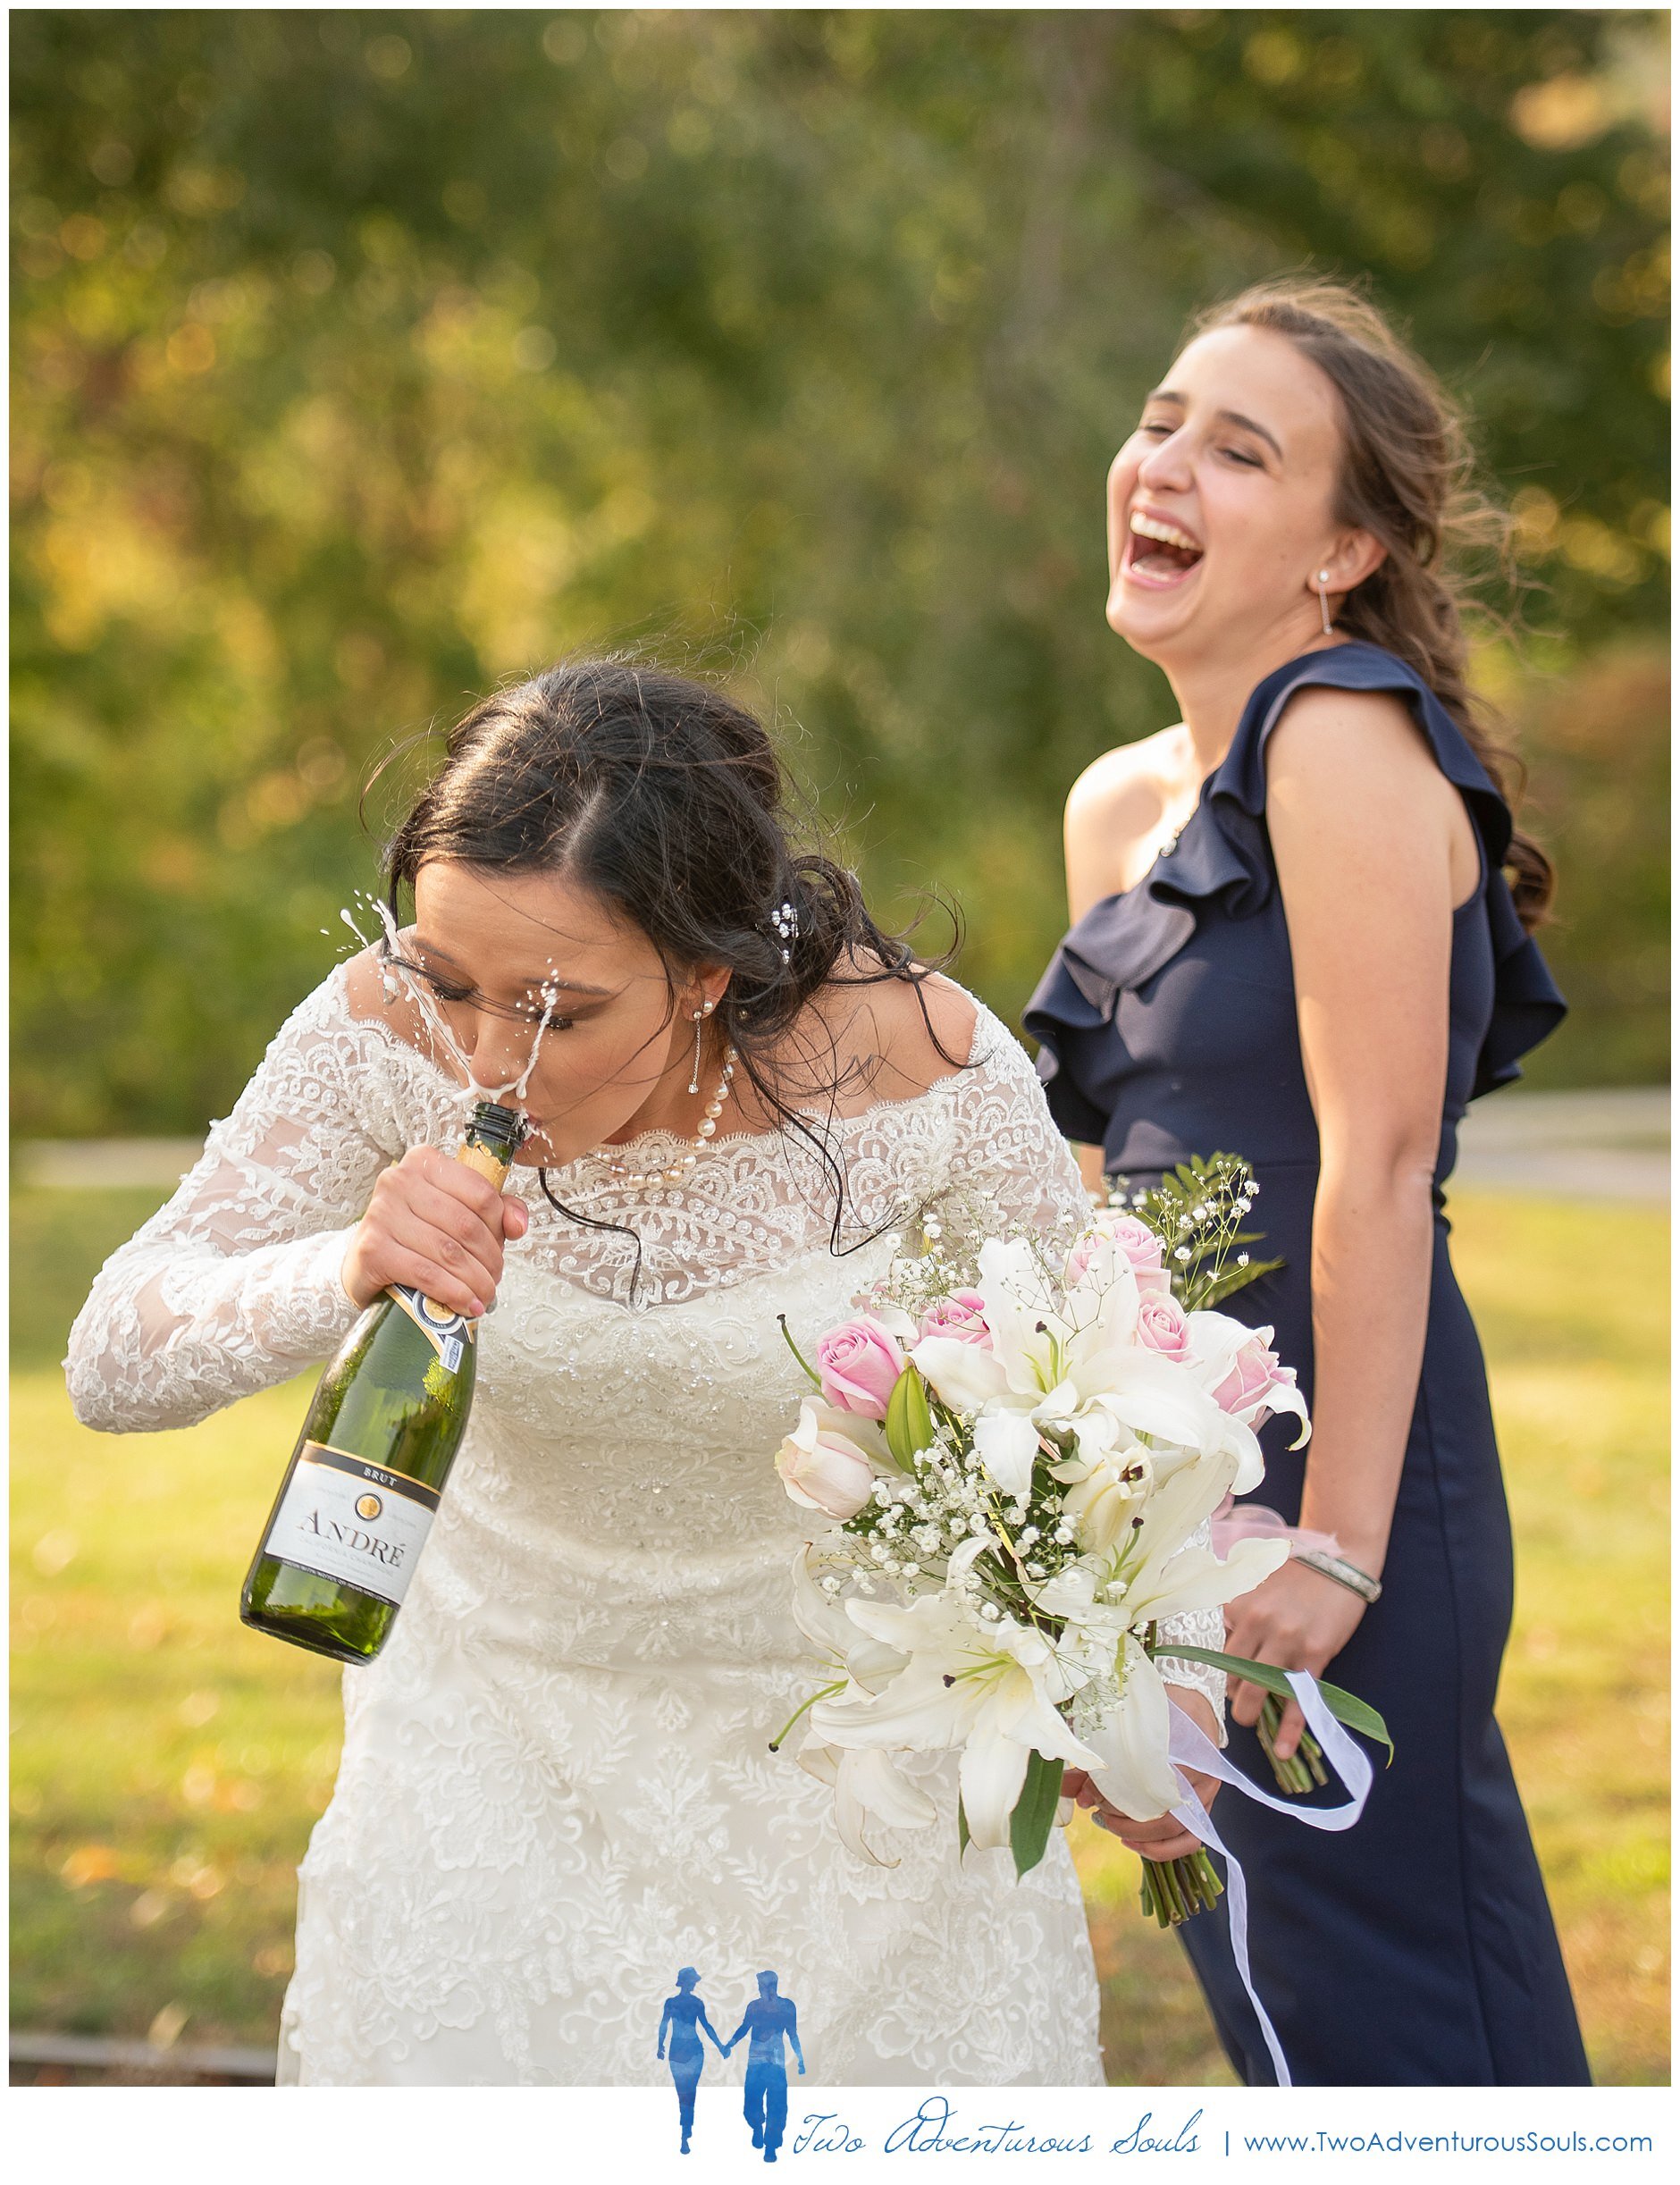 Lewiston Maine Wedding, Maine Wedding Photographers, Two Adventurous Souls - 101020_0031.jpg